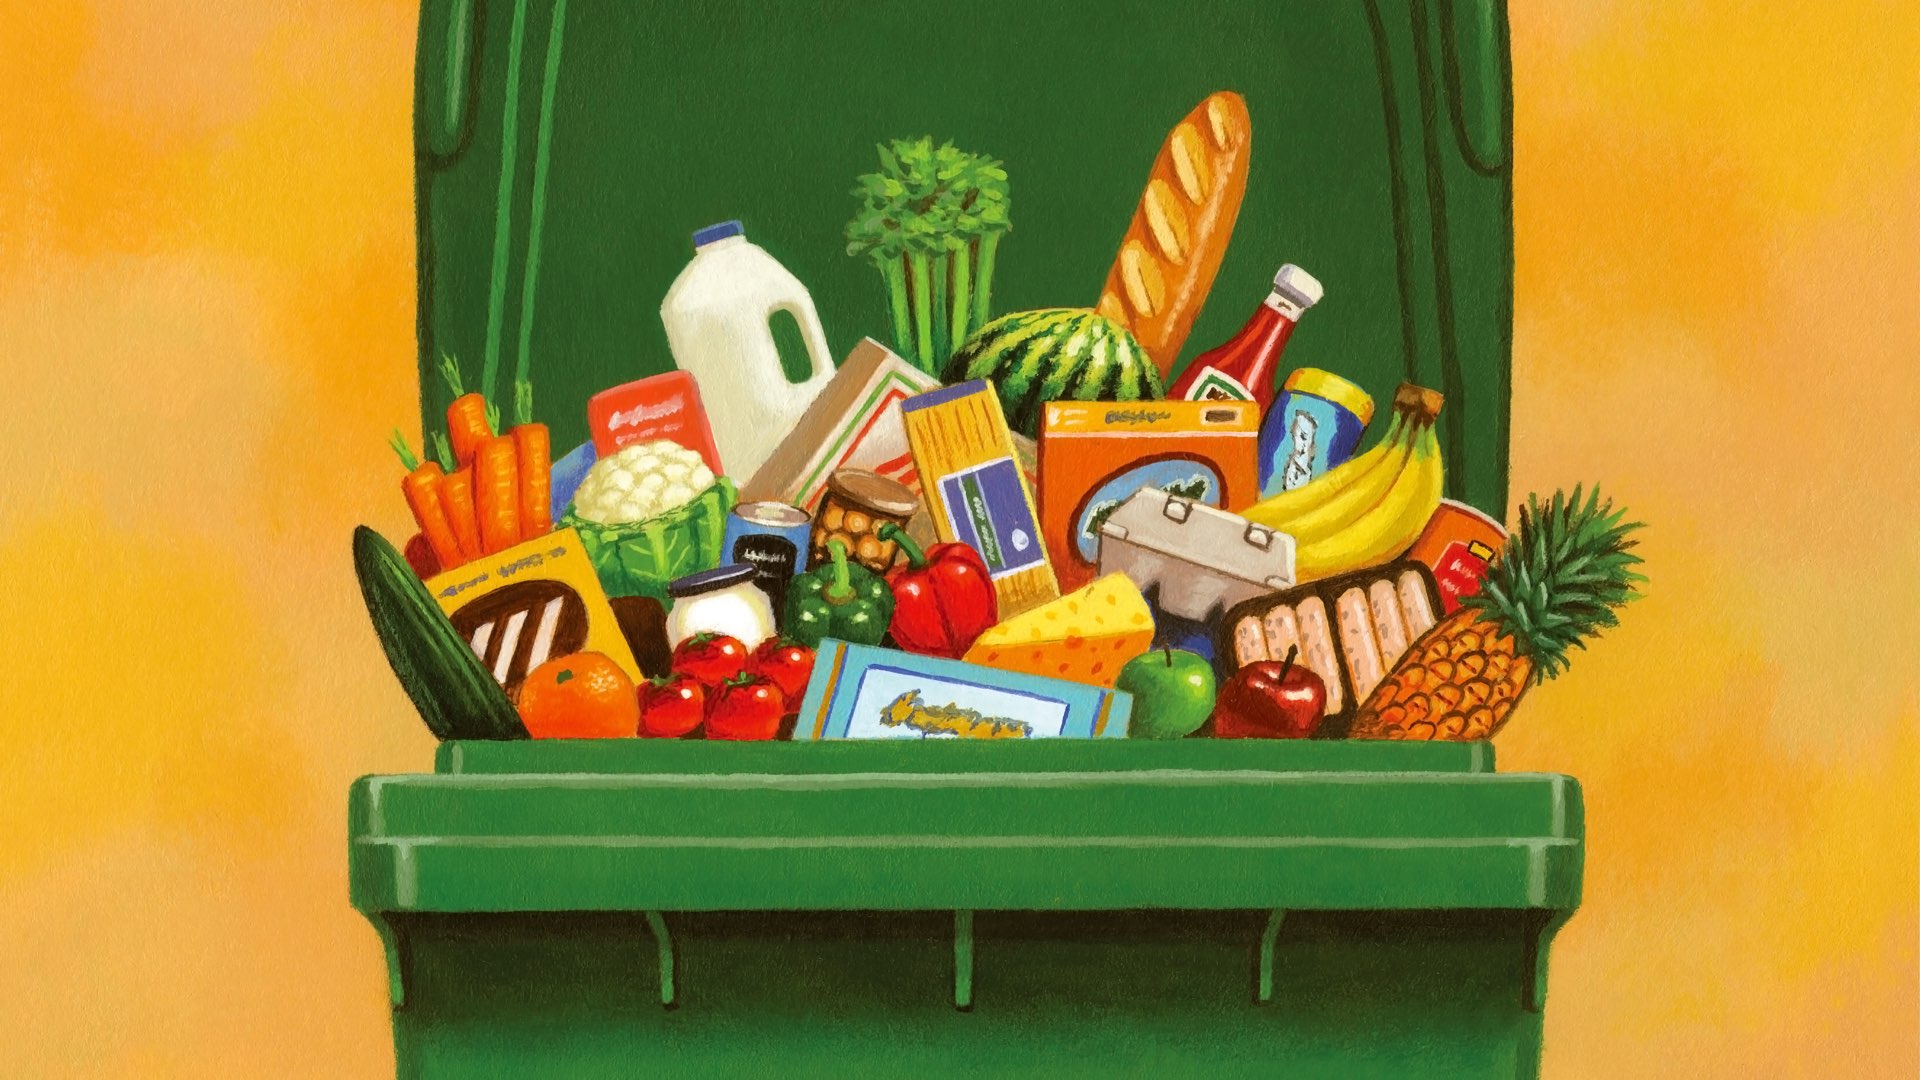 Illustration of edible food in a garbage bin.